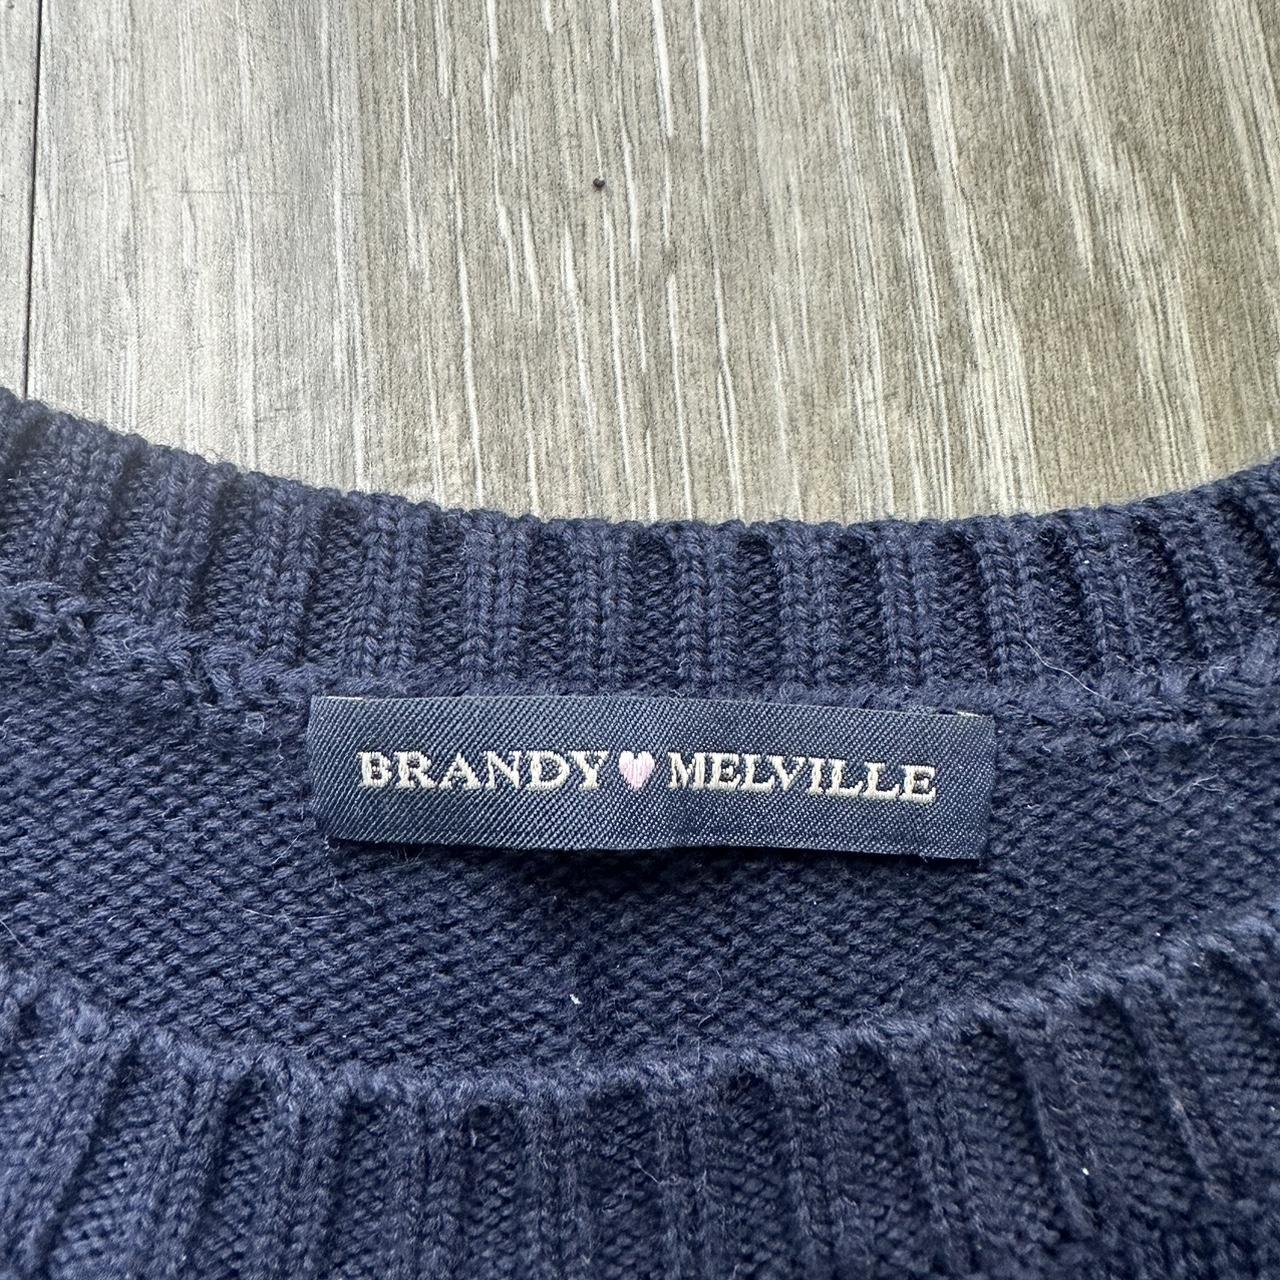 Brandy Melville stripped sweater - Depop